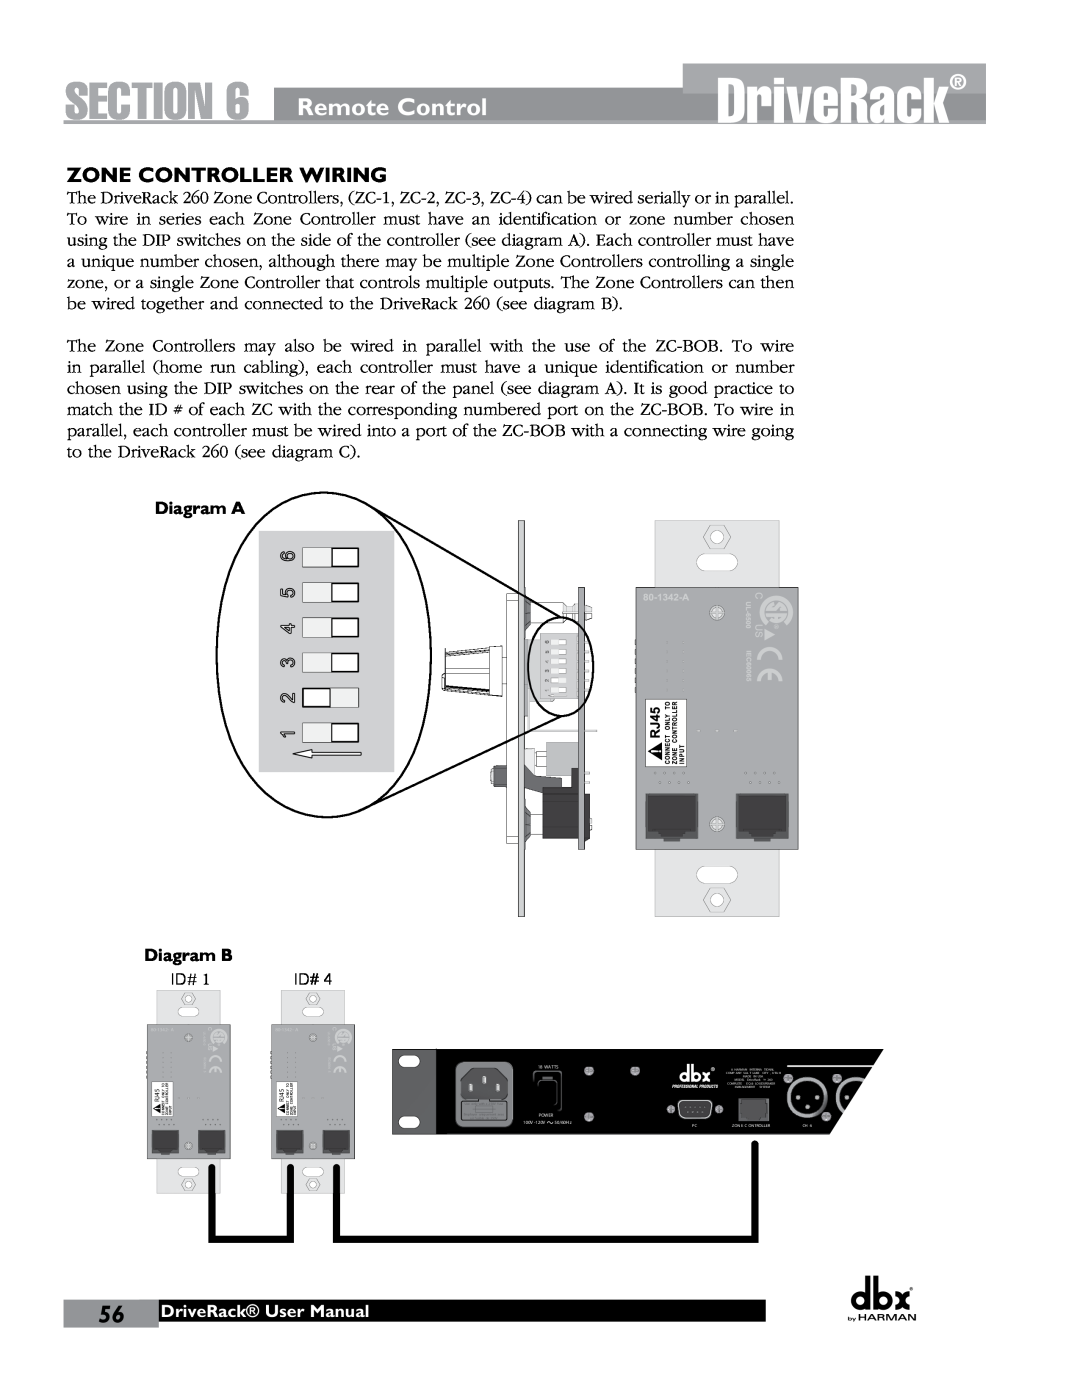 JBL 260 Section, Remote Control, Zone Controller Wiring, Diagram A Diagram B, DriveRack User Manual, 80-1342-A, Wa Tts 